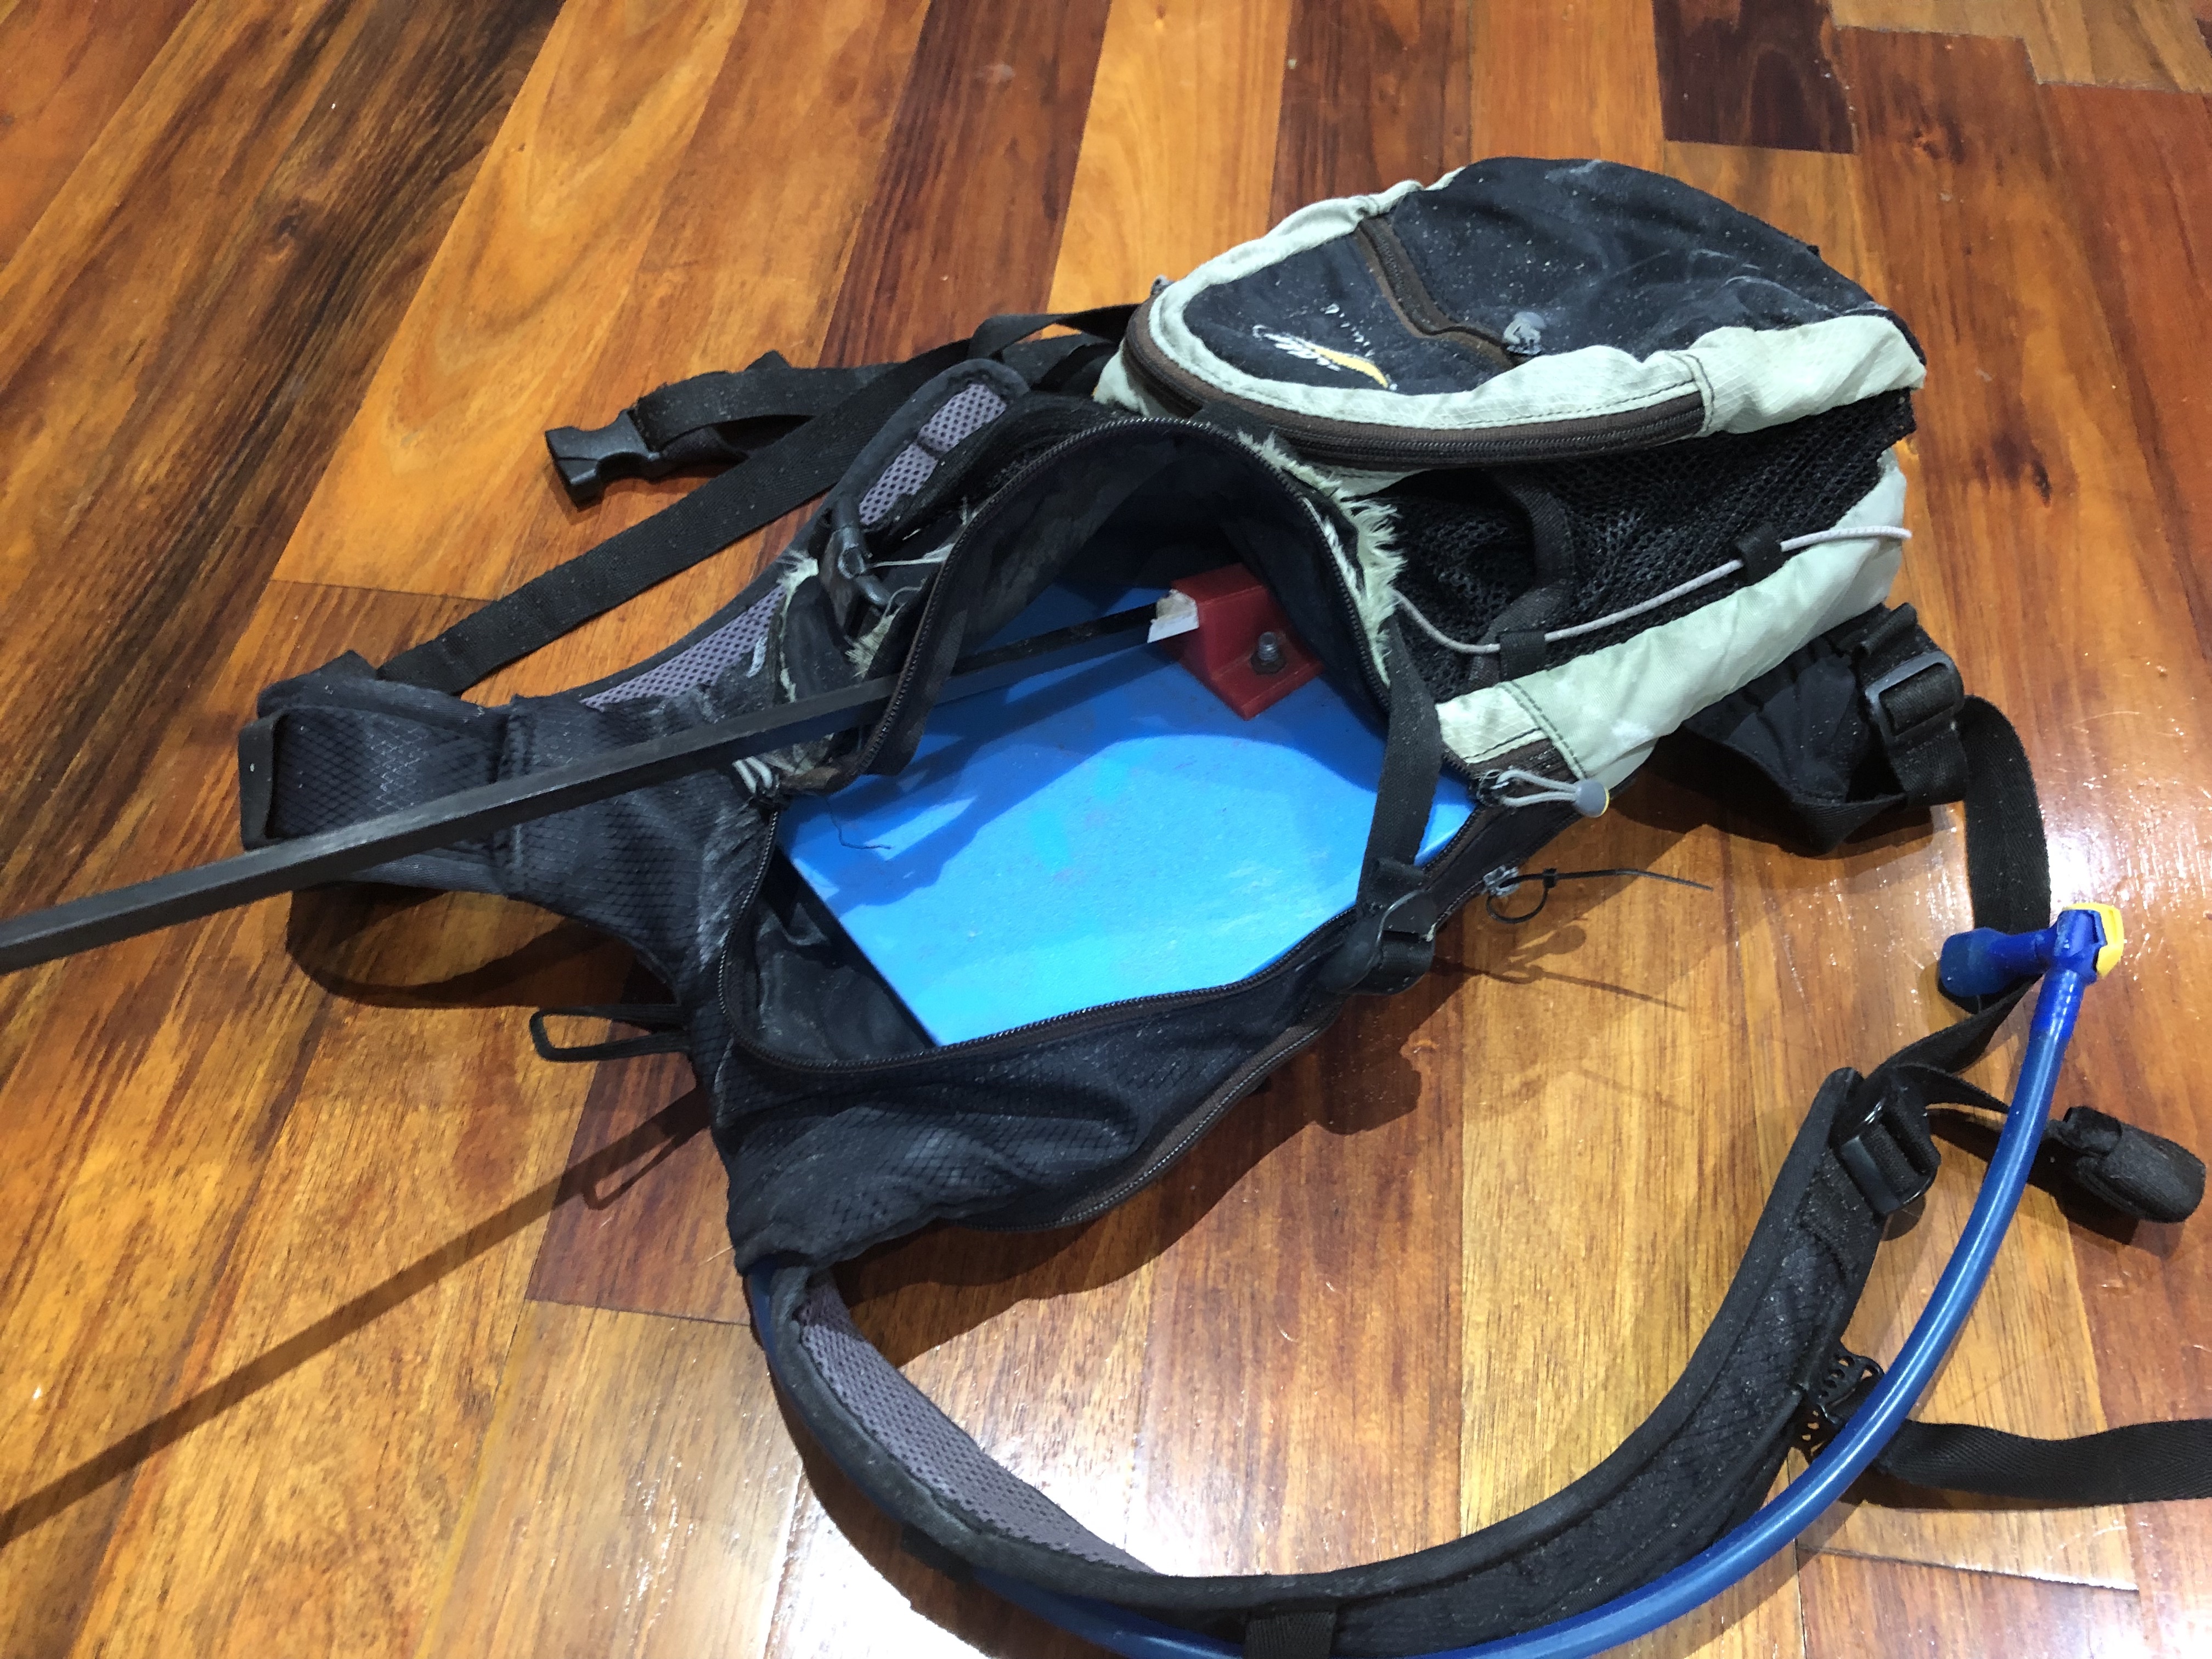 GoPro Max 360 Backpack mount